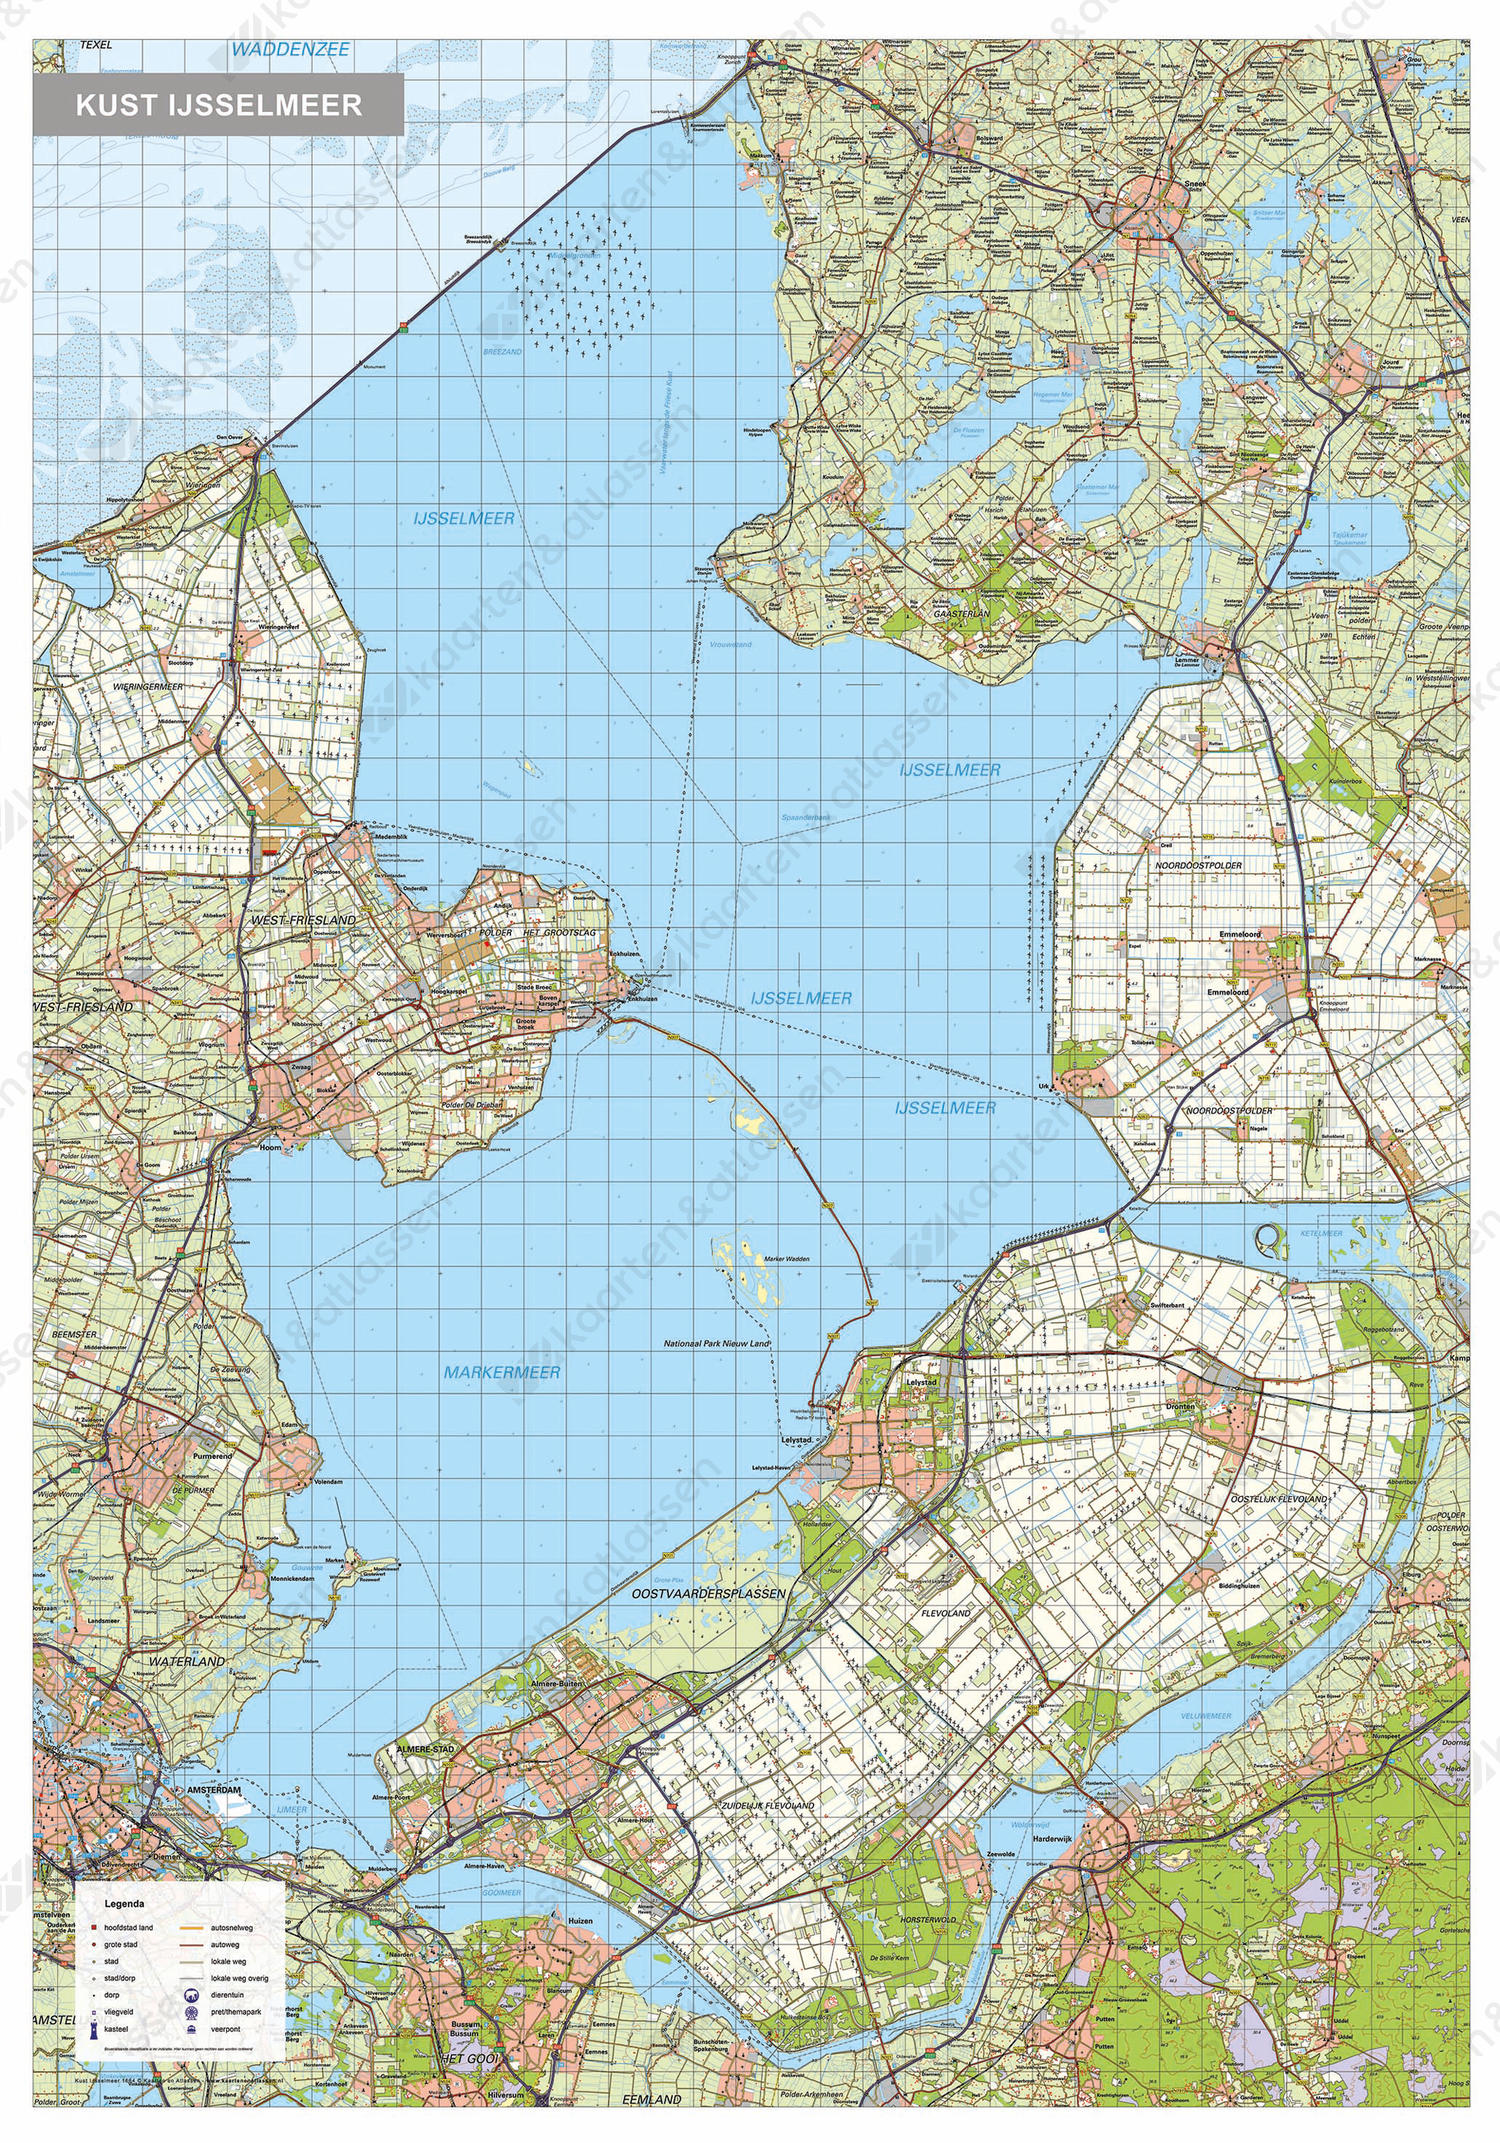 IJsselmeerkust regiokaart